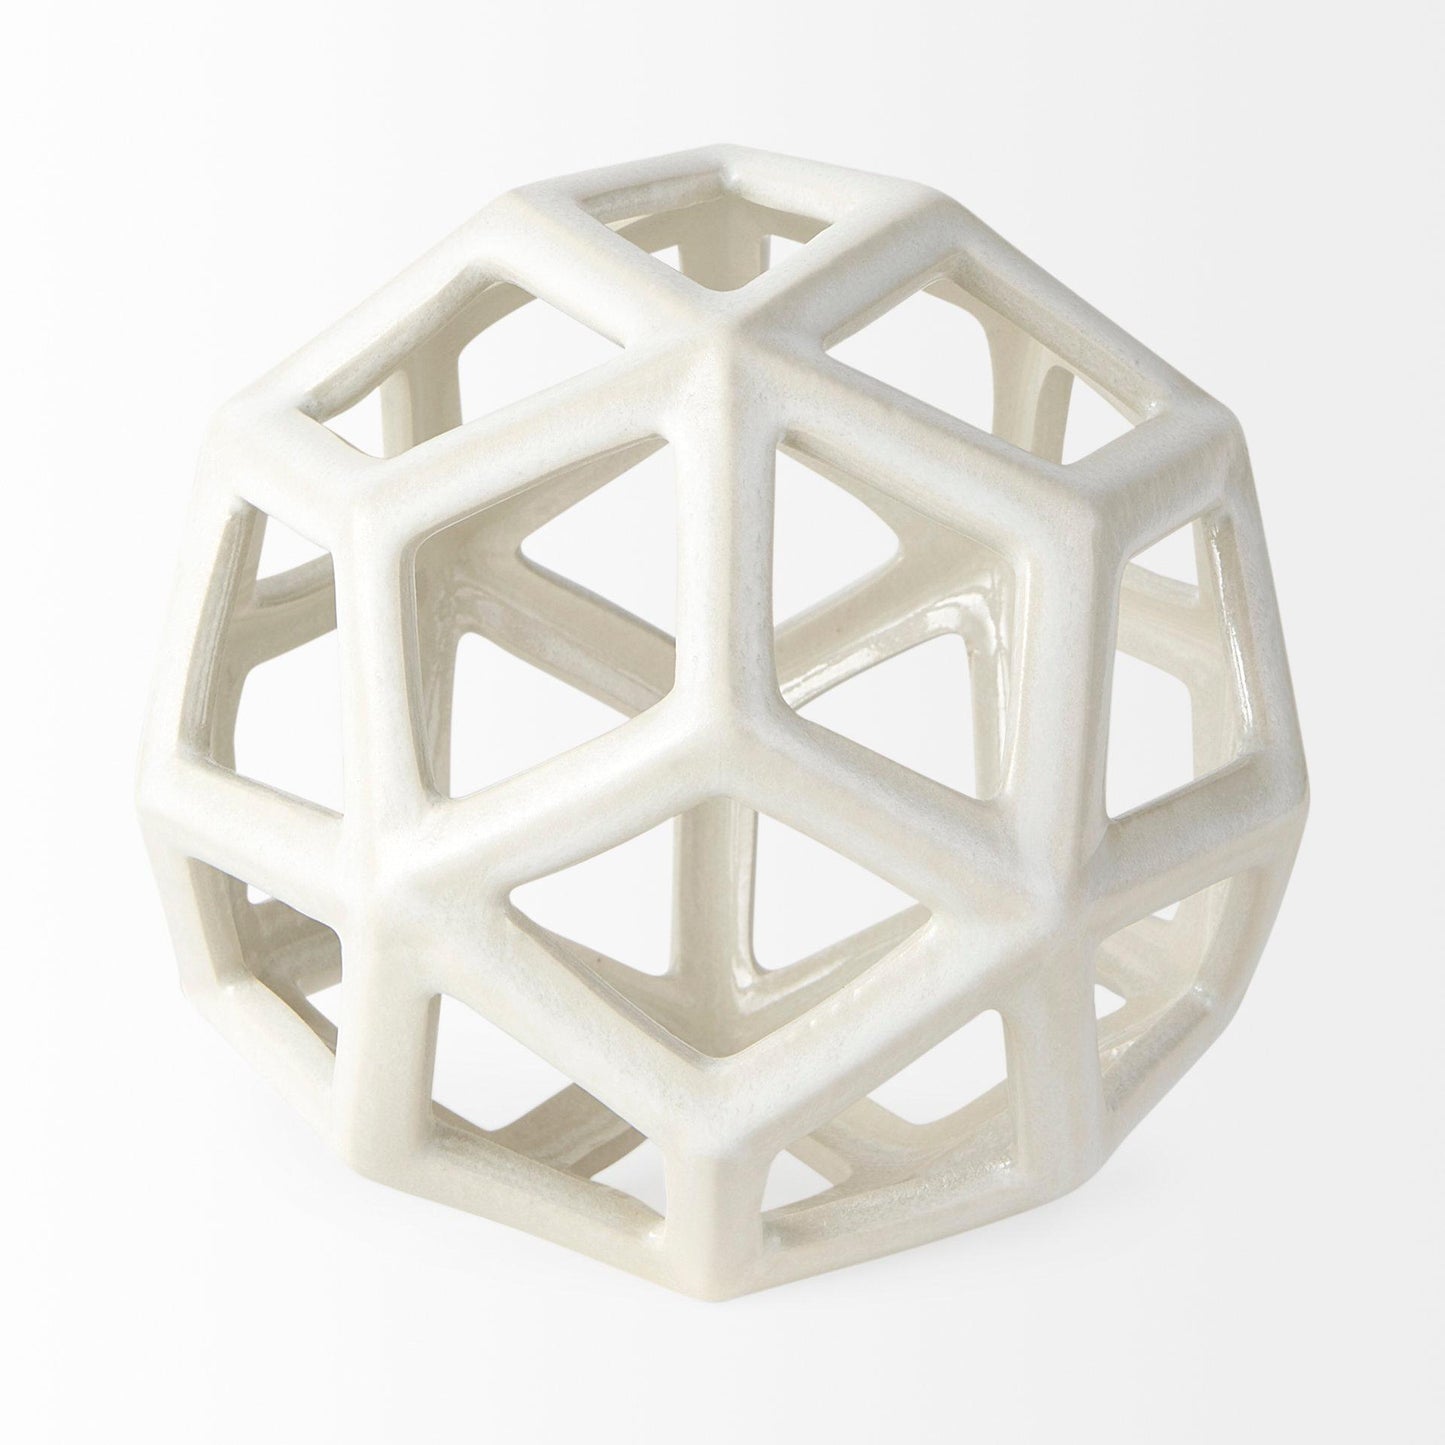 Geom 7.1L x 7.1W x 7.1H White Ceramic Geometric Object